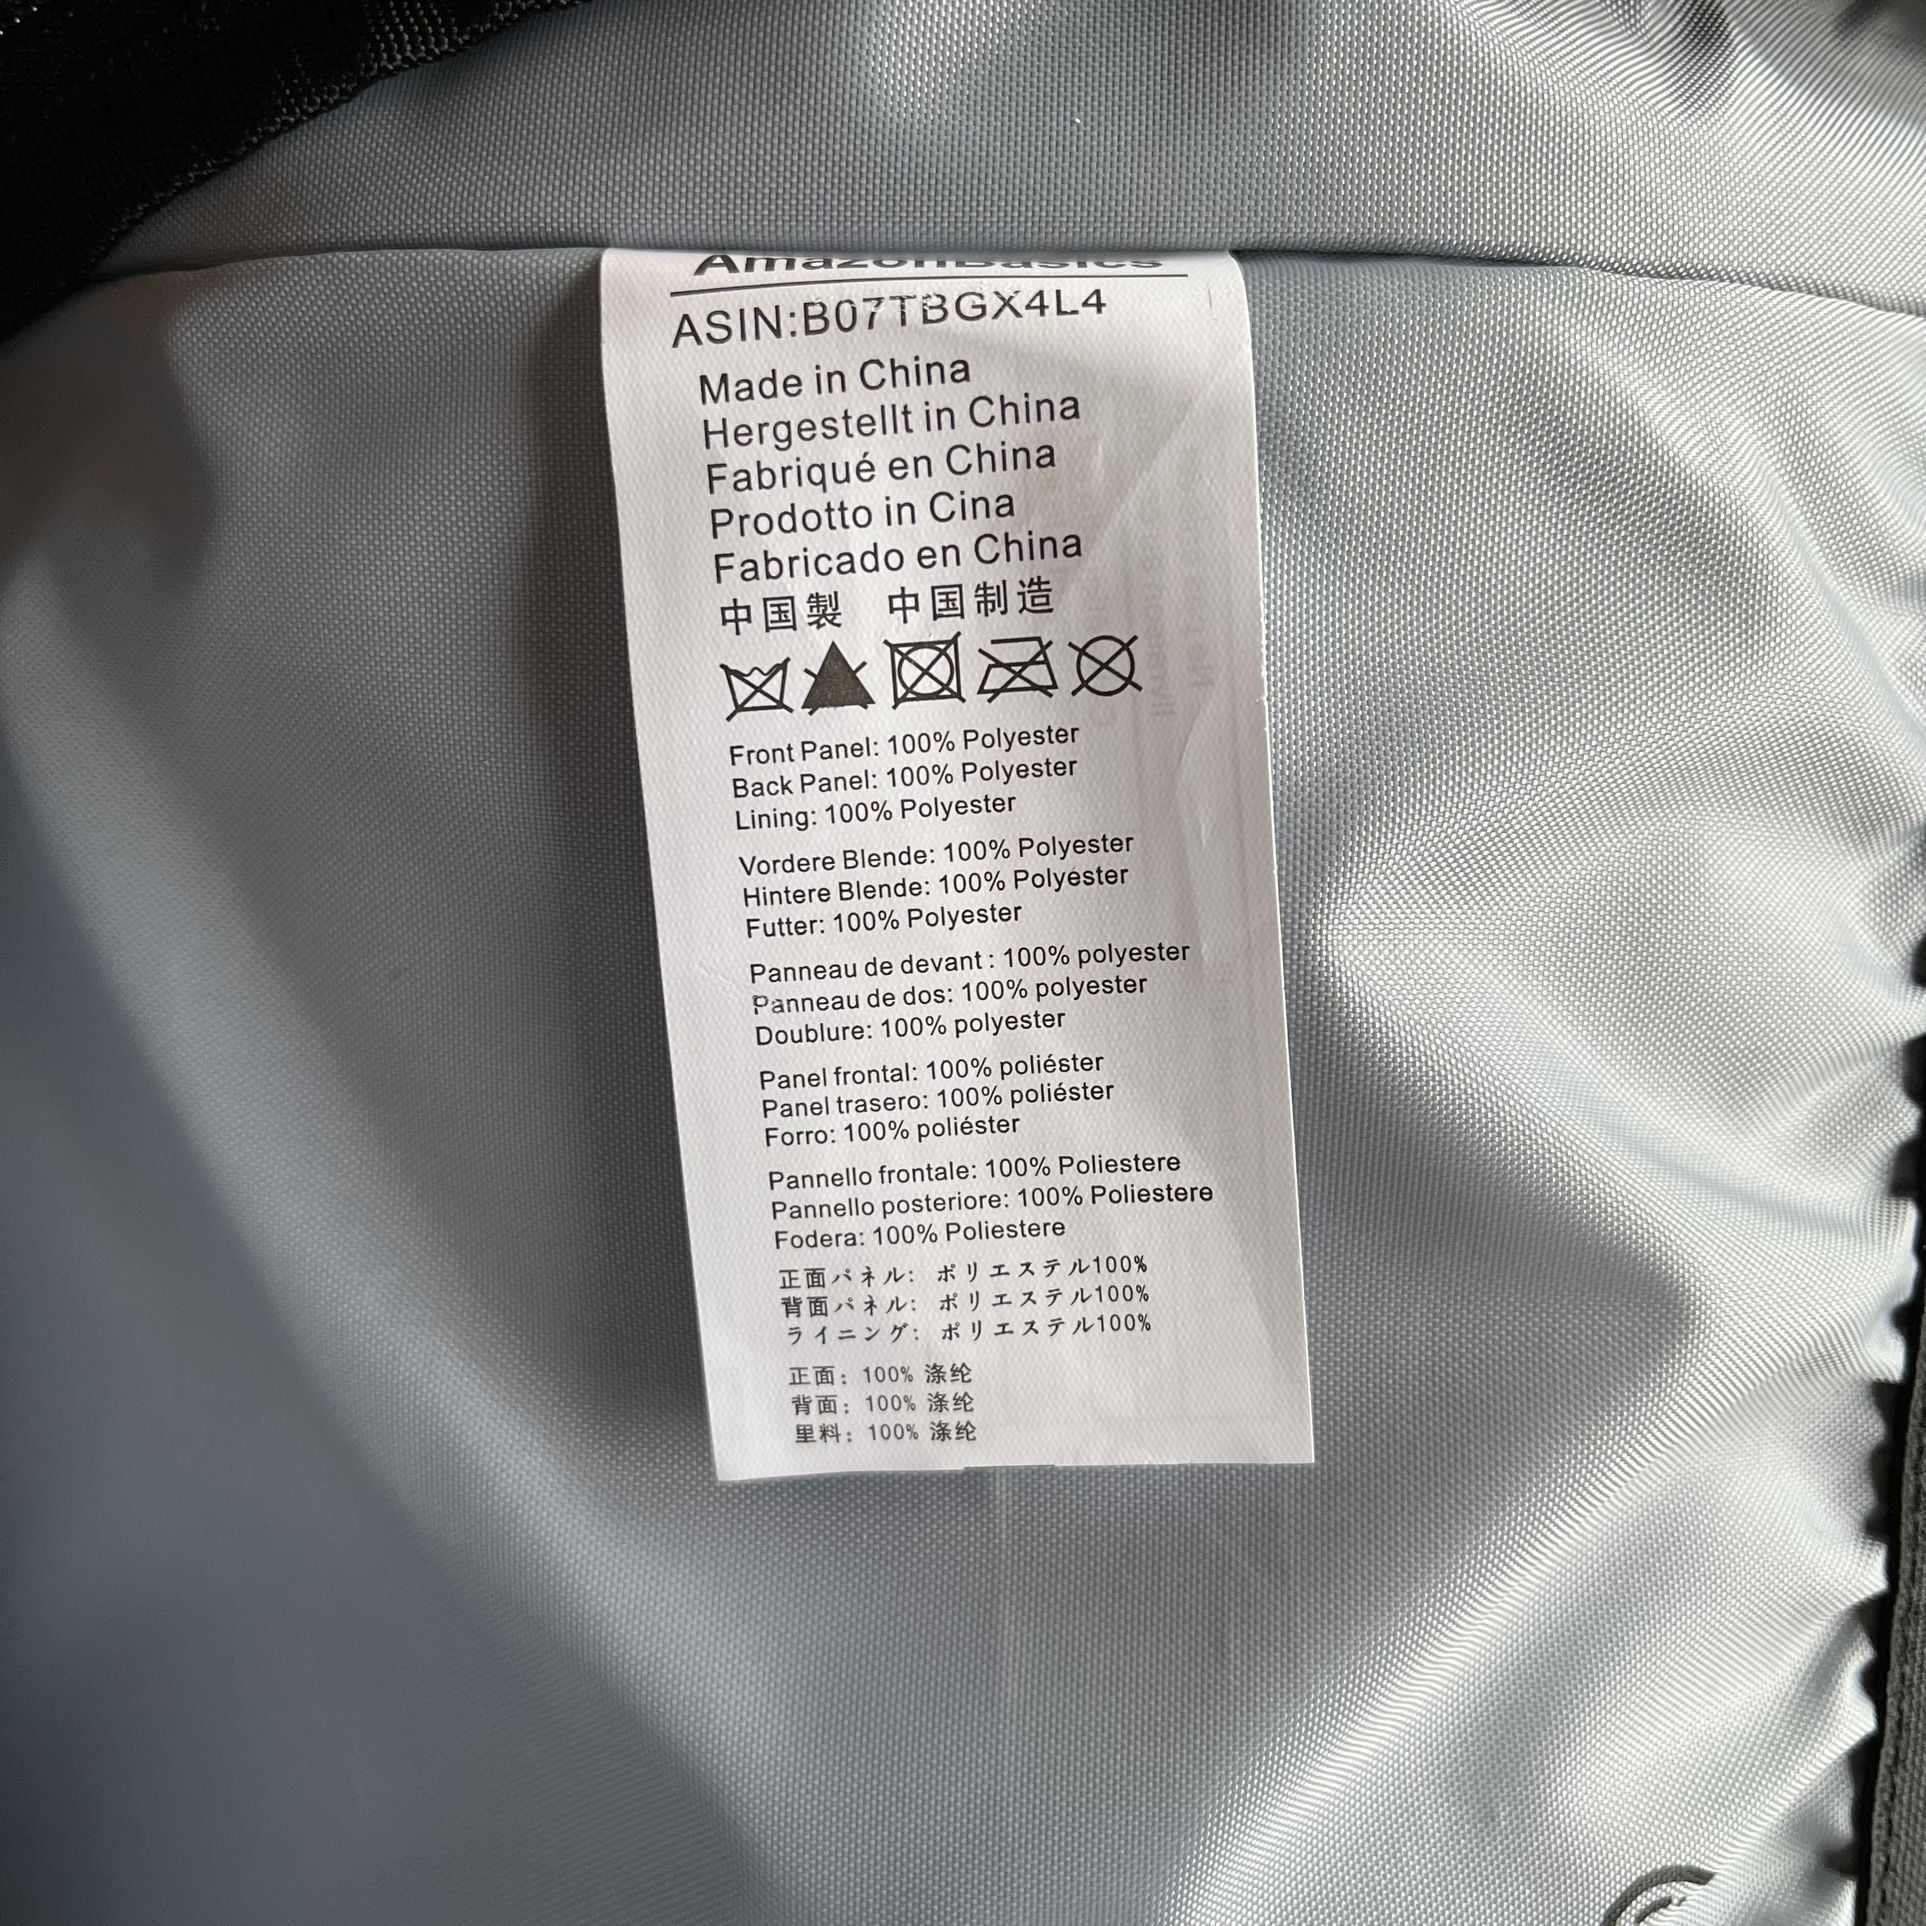 Amazon Basics Lightweight  Backpack